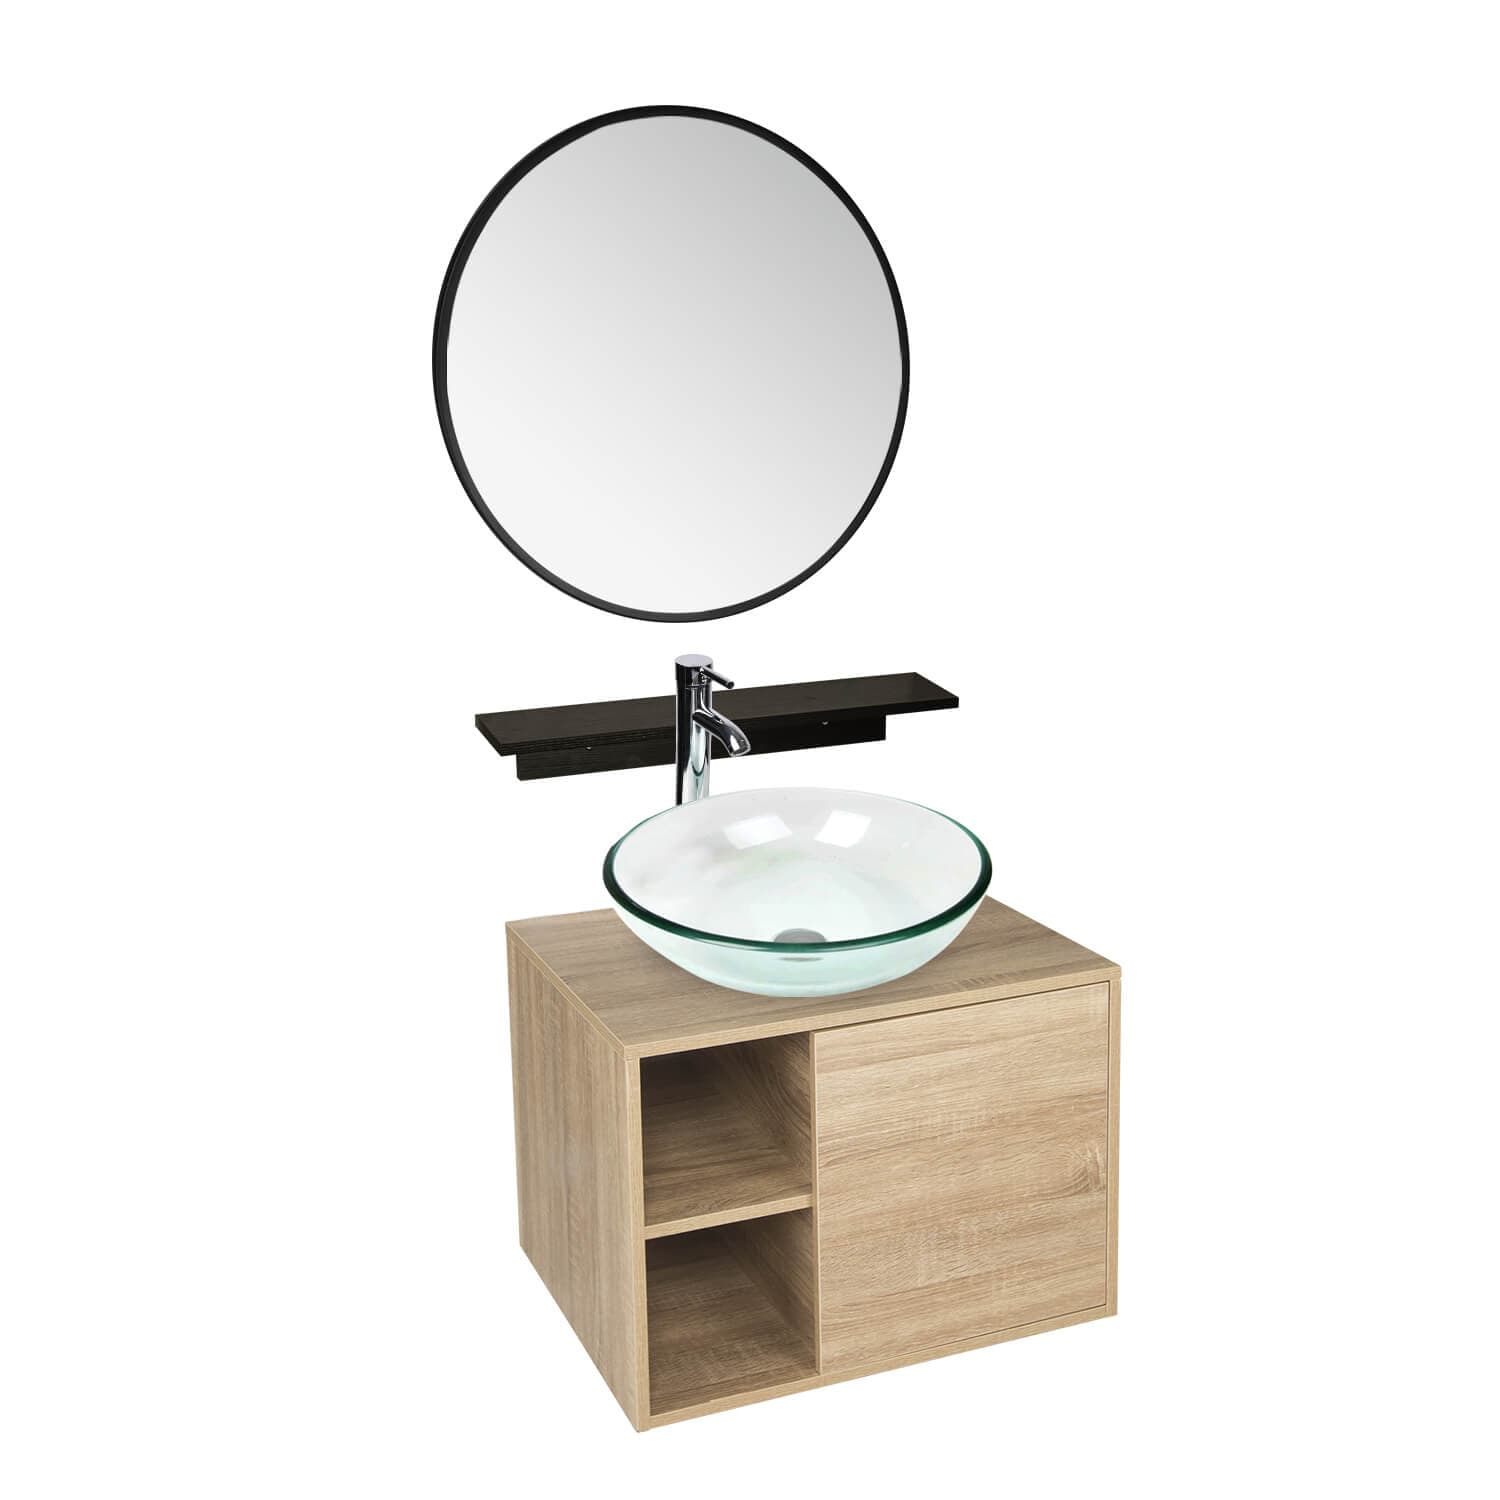 Elecwish Bathroom vanities 23.6" Modern Bathroom Vanity Cabinet With Round Mirror Wall-Mounted Side Shelf with bathroom sink